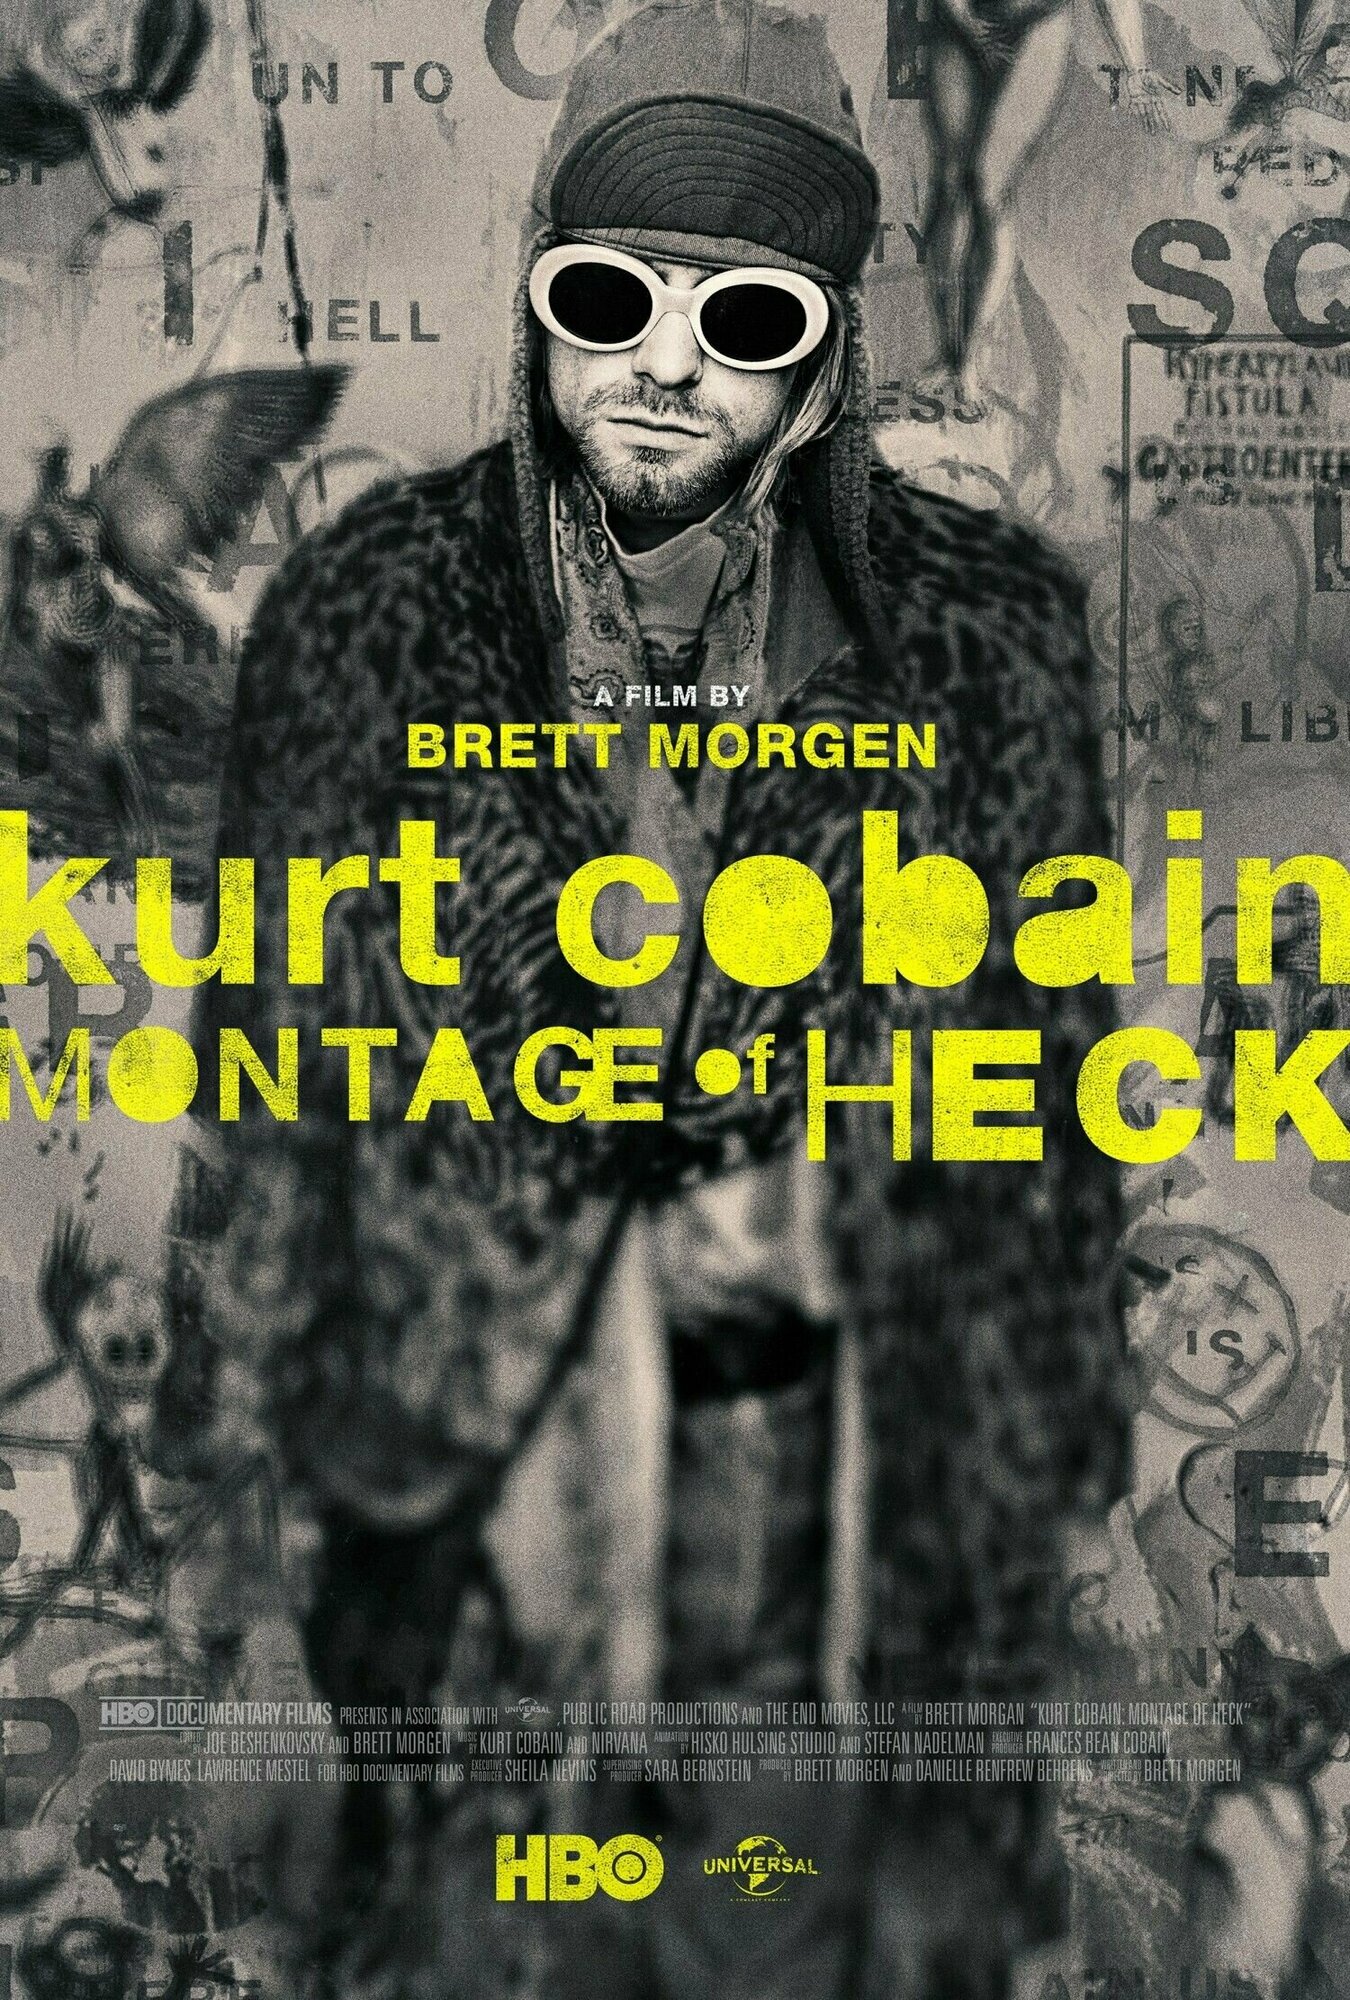 Плакат постер на бумаге Kurt Cobain (Курт Кобейн Nirvana). Размер 21 на 30 см